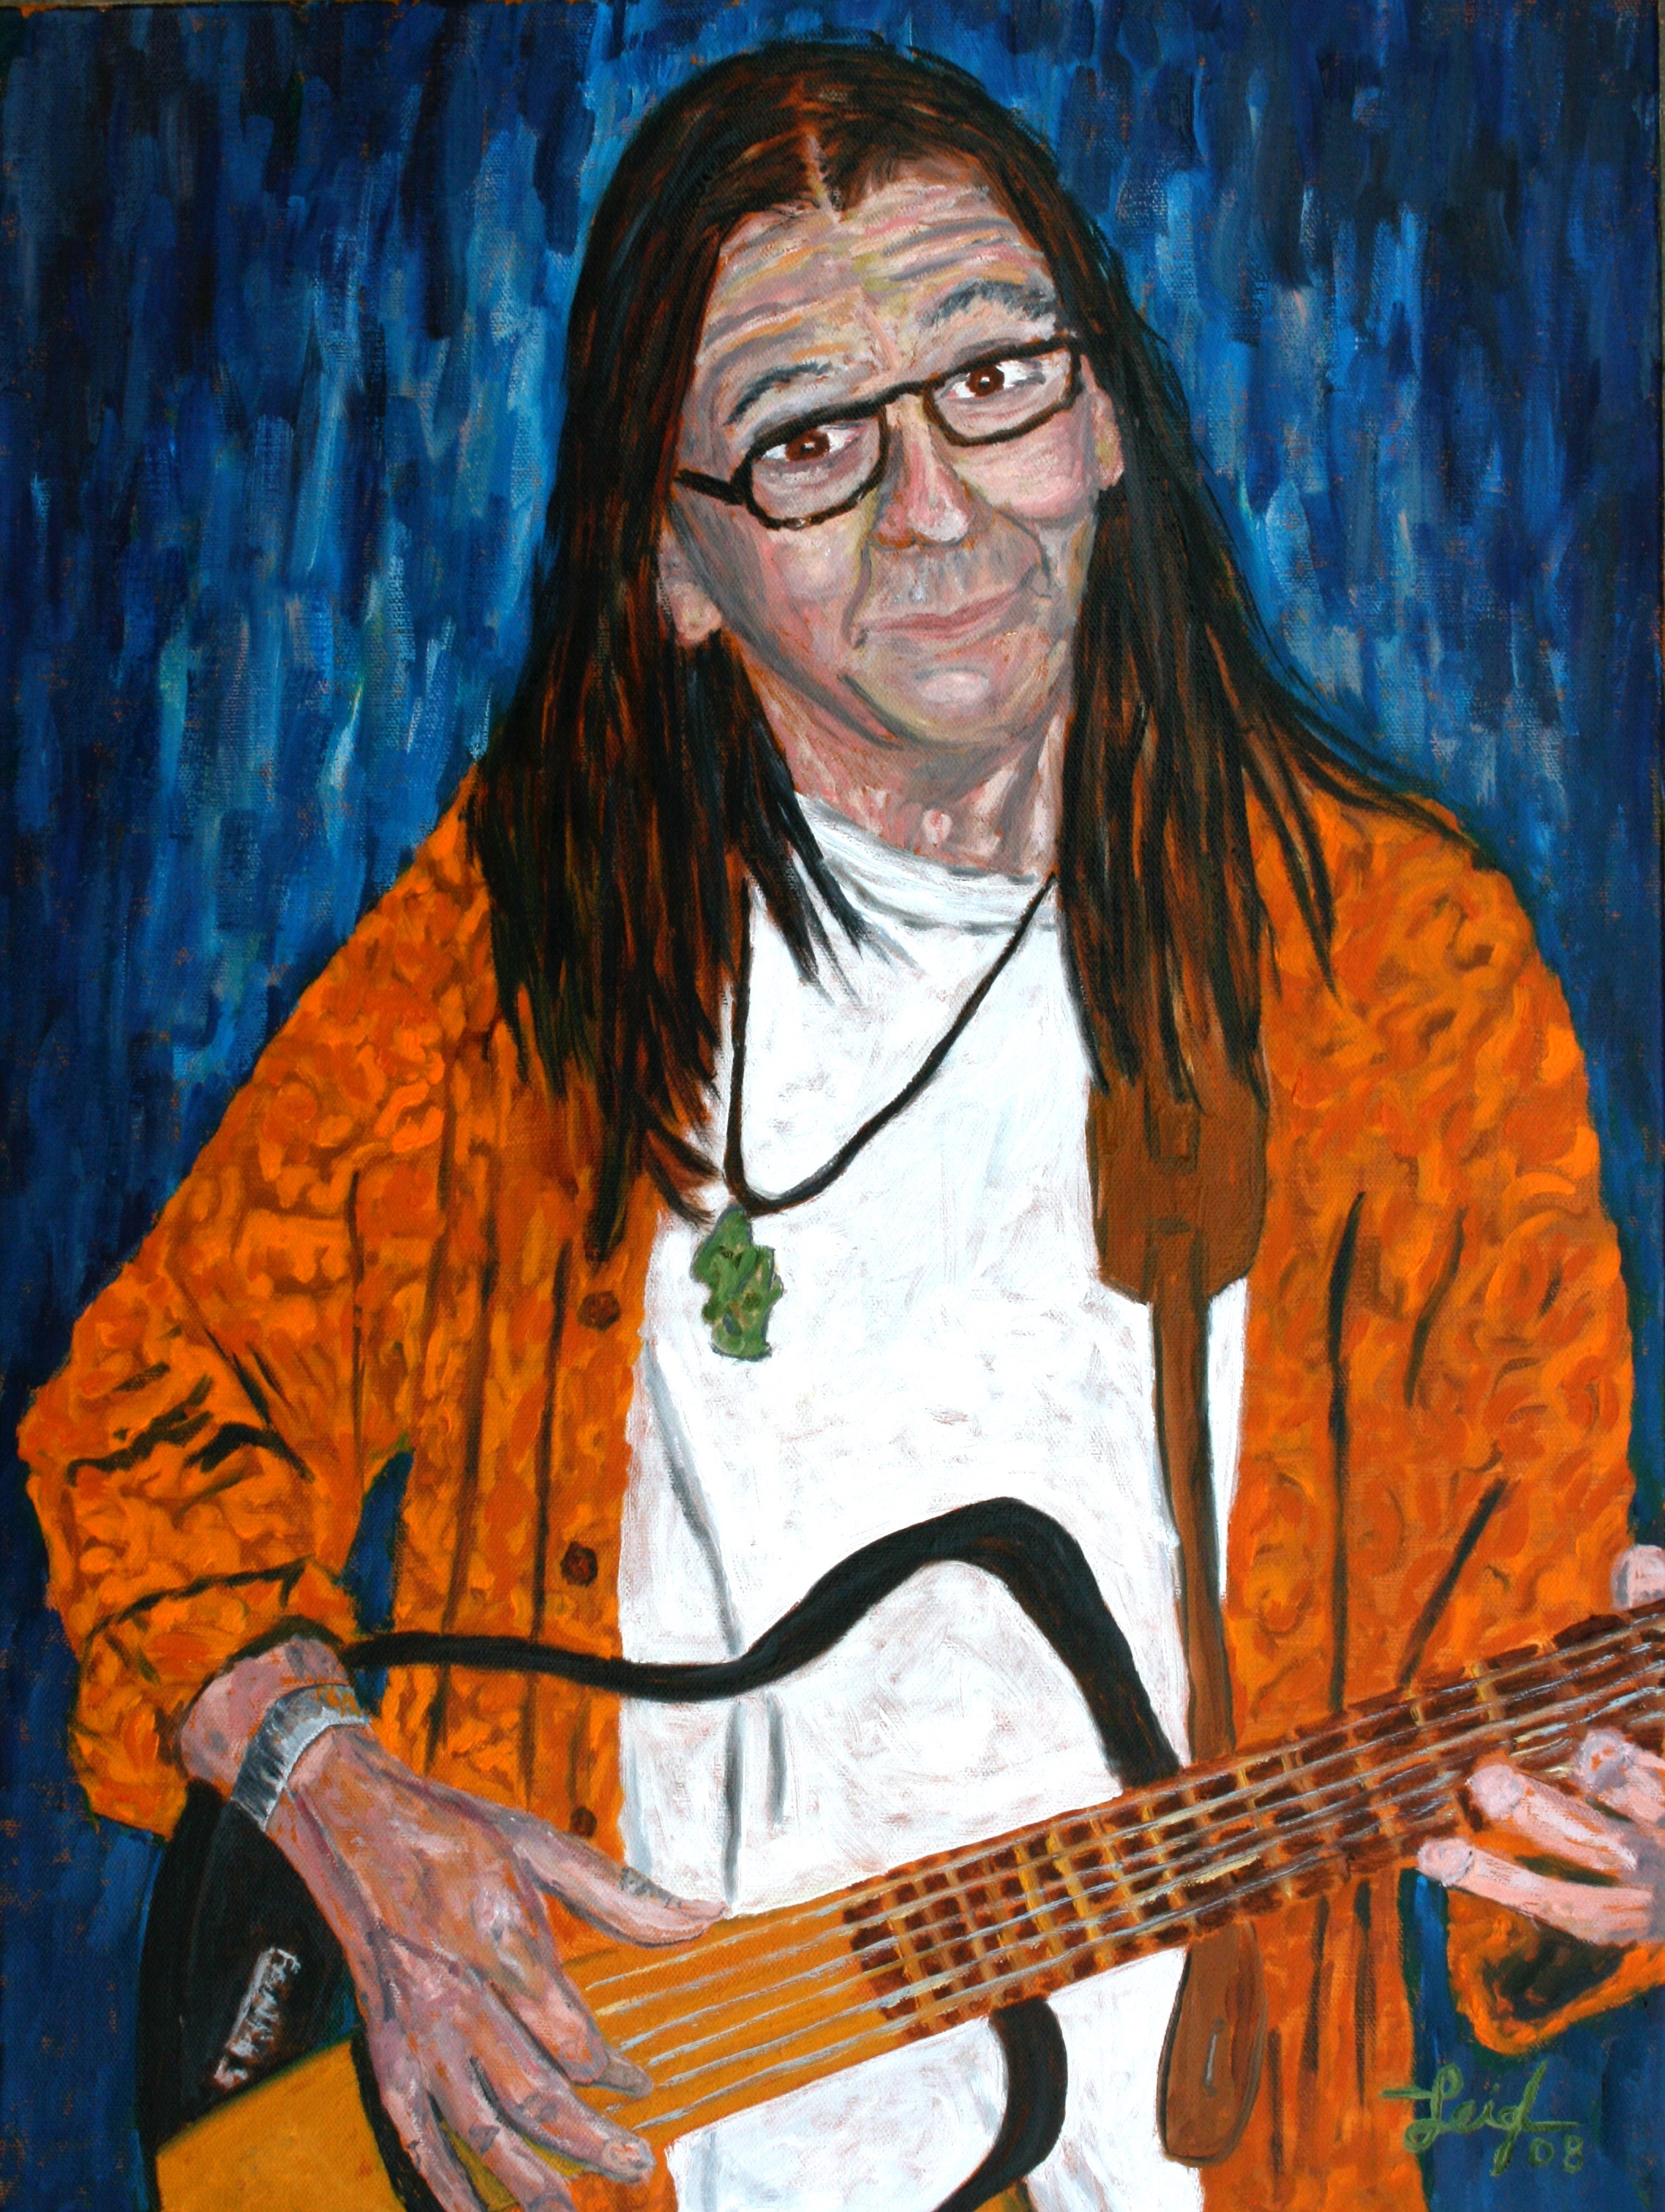 Buffalo John Playing Guitar  ~  
John Webster, Bigfork, MT
2008  •  18 x 24 